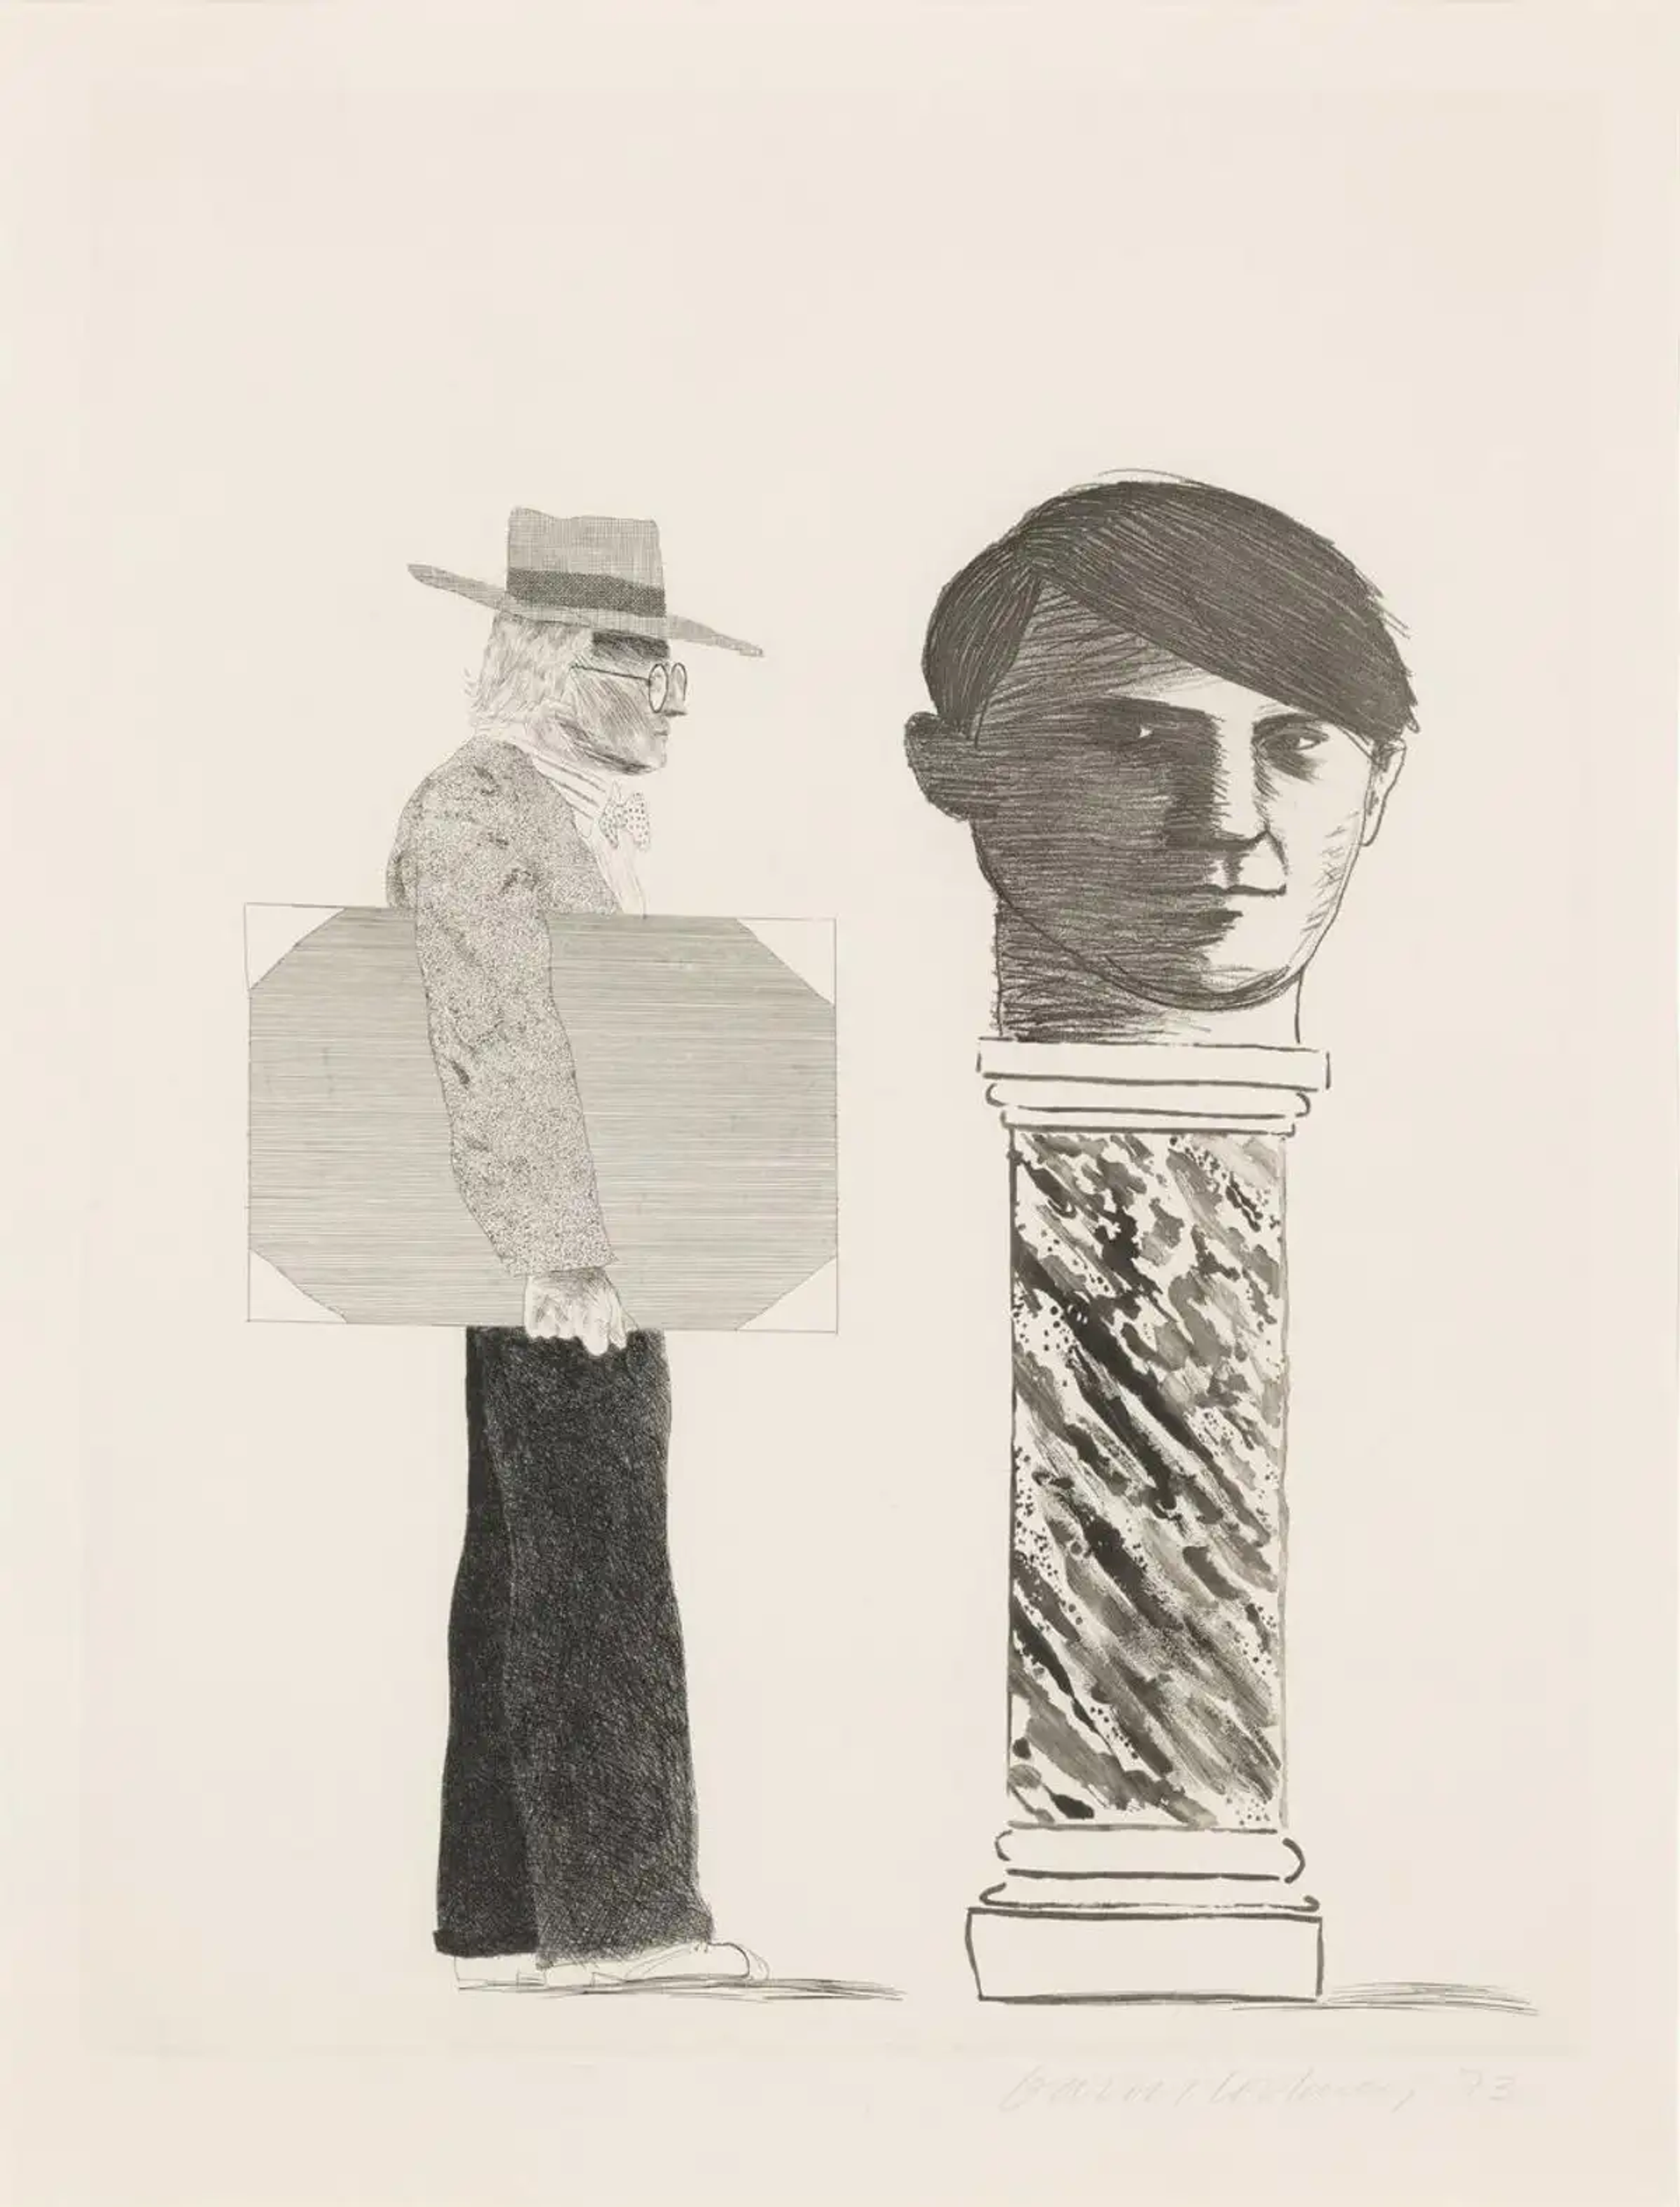 Pablo Picasso and David Hockney